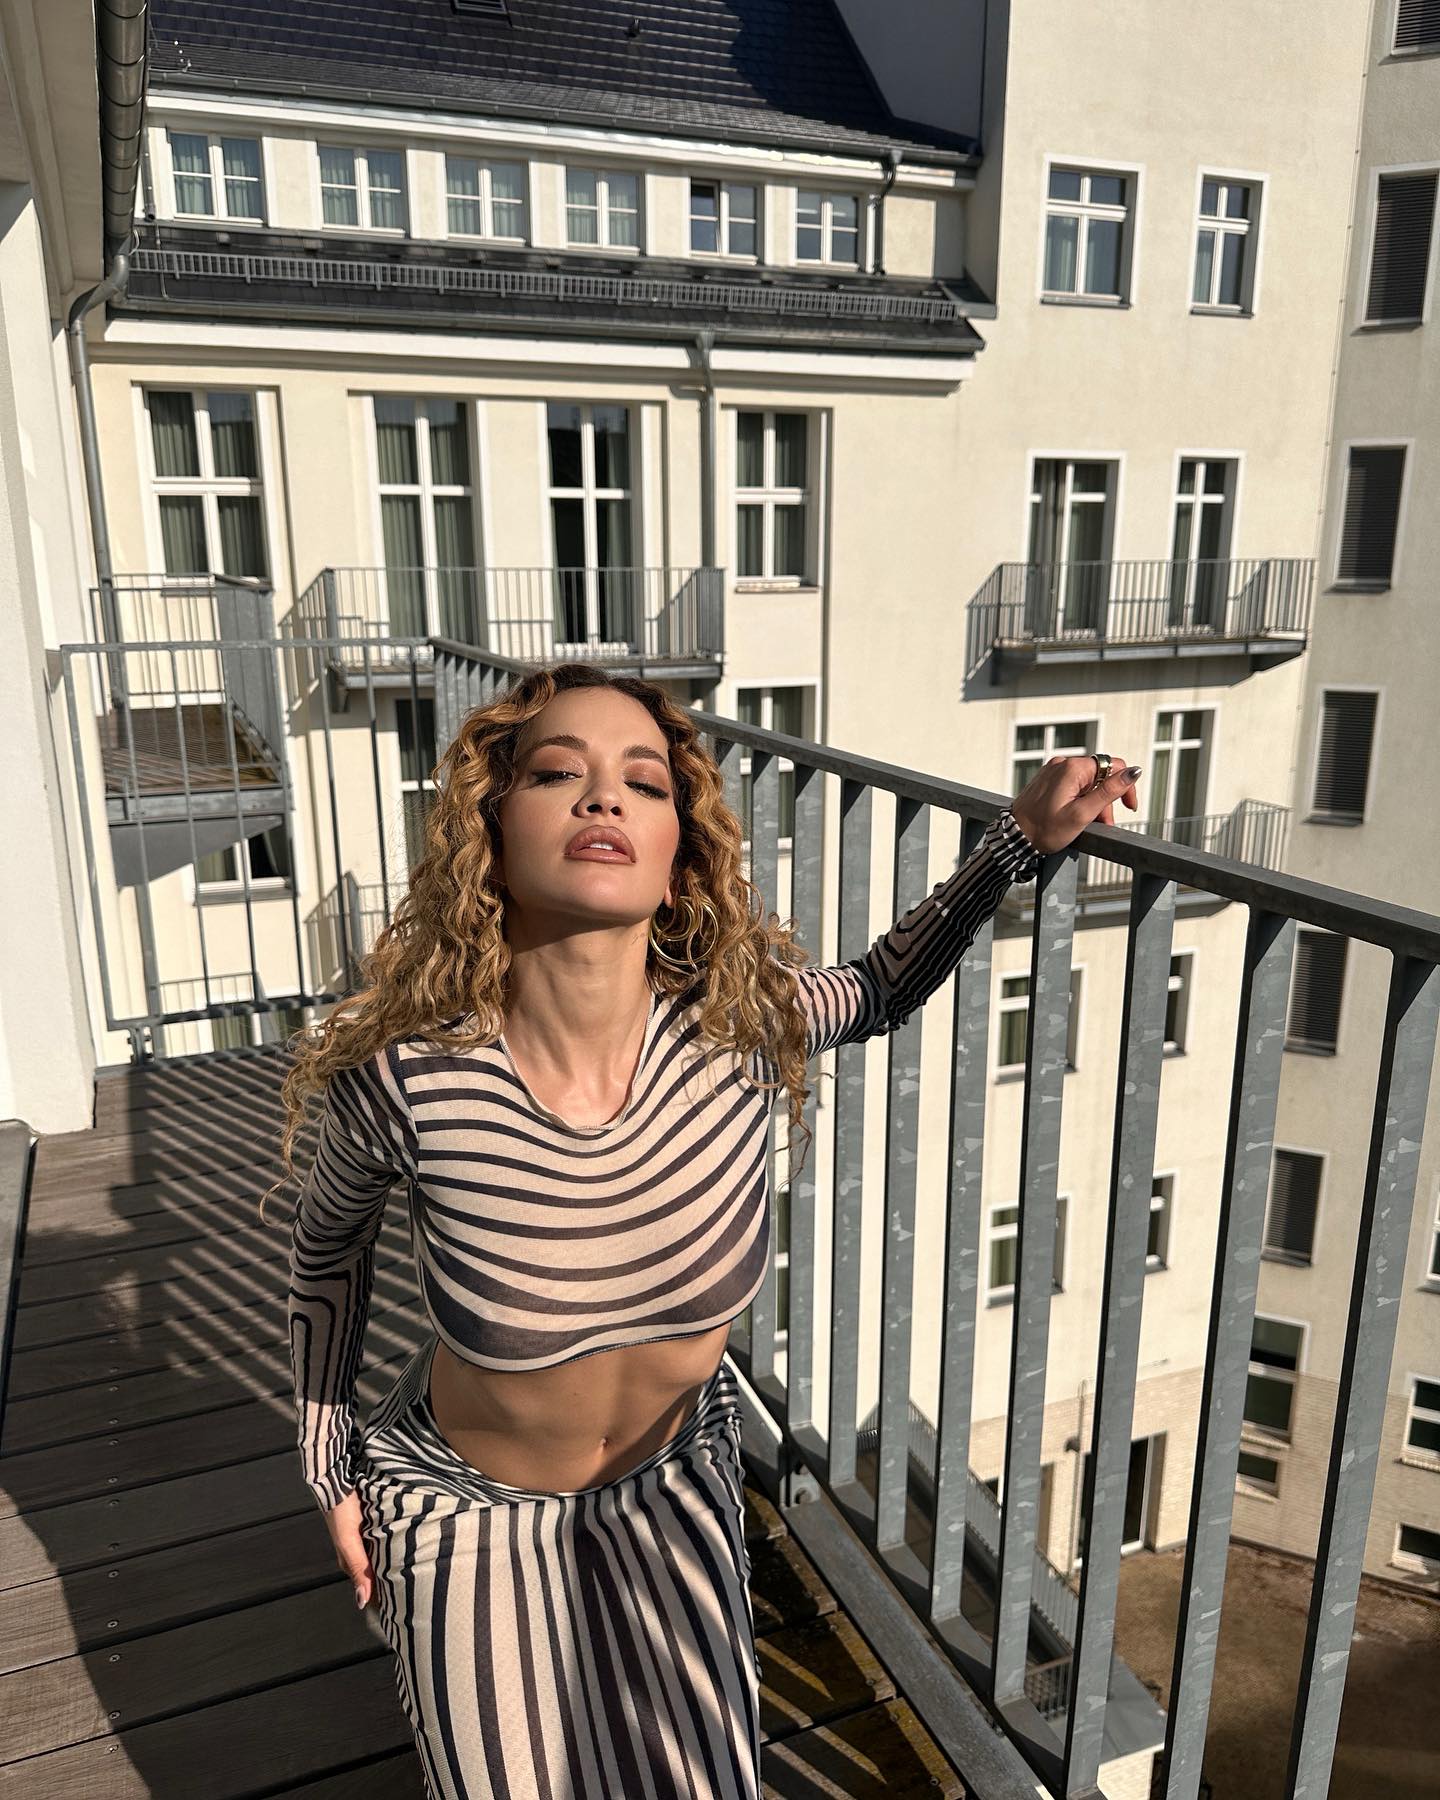 Photos n°1 : Rita Ora’s Balcony Display in Berlin!